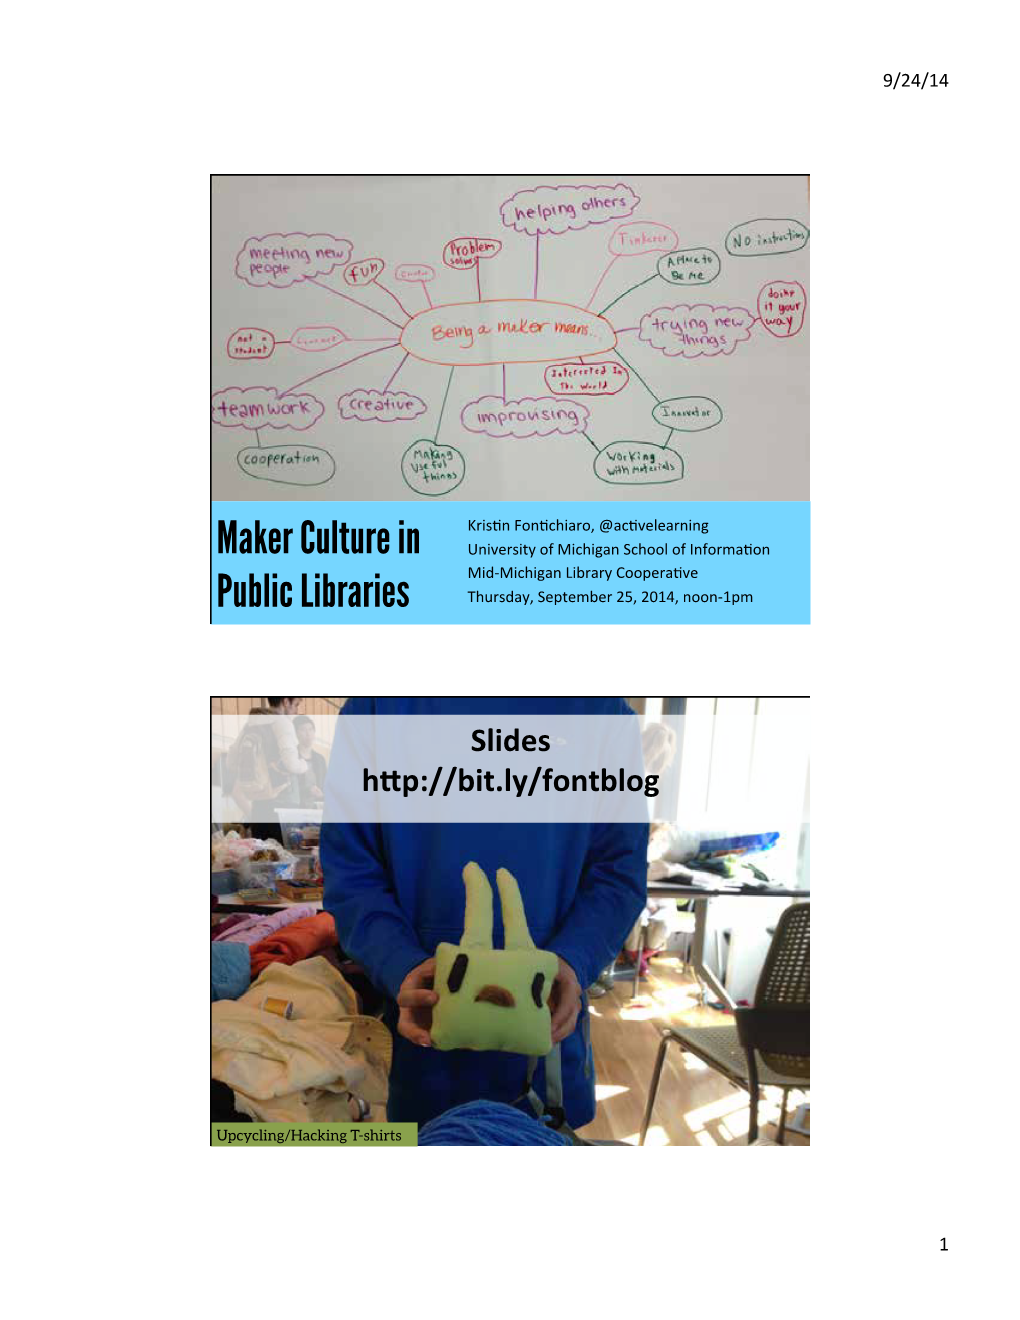 Maker Culture in Public Libraries